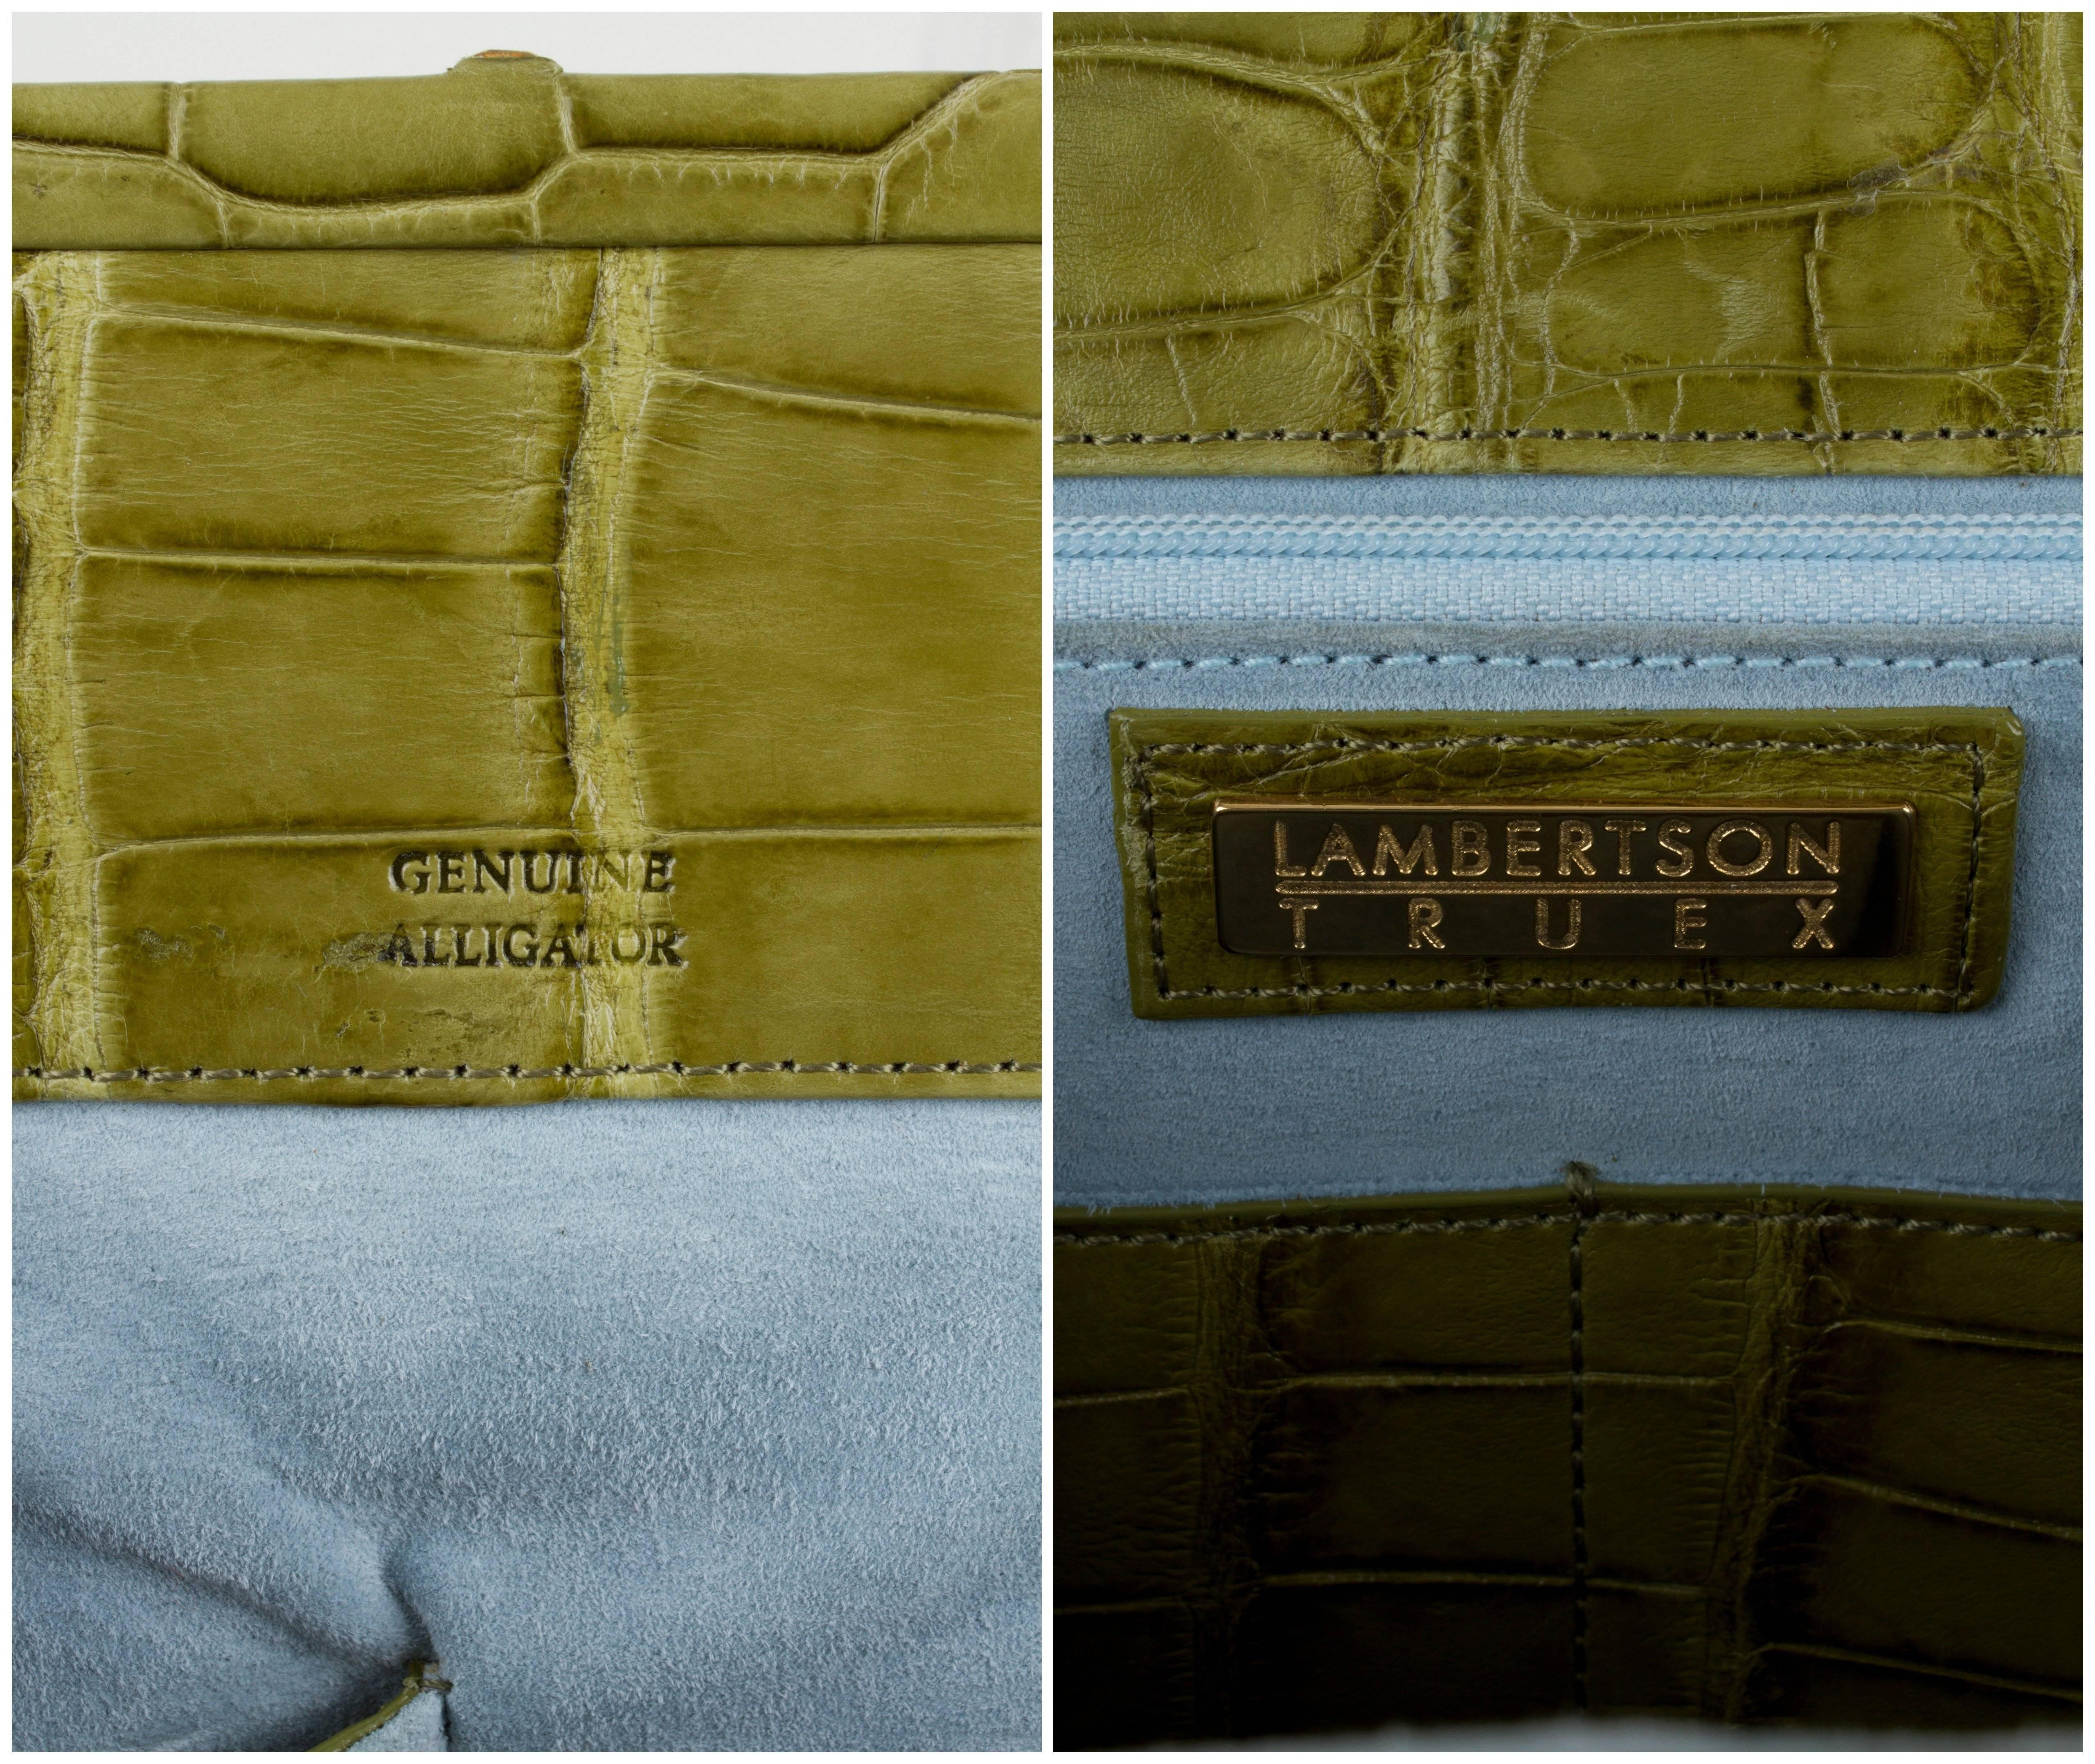 LAMBERTSON TRUEX Green Genuine Alligator Large Framed Shoulder Bag Purse 3